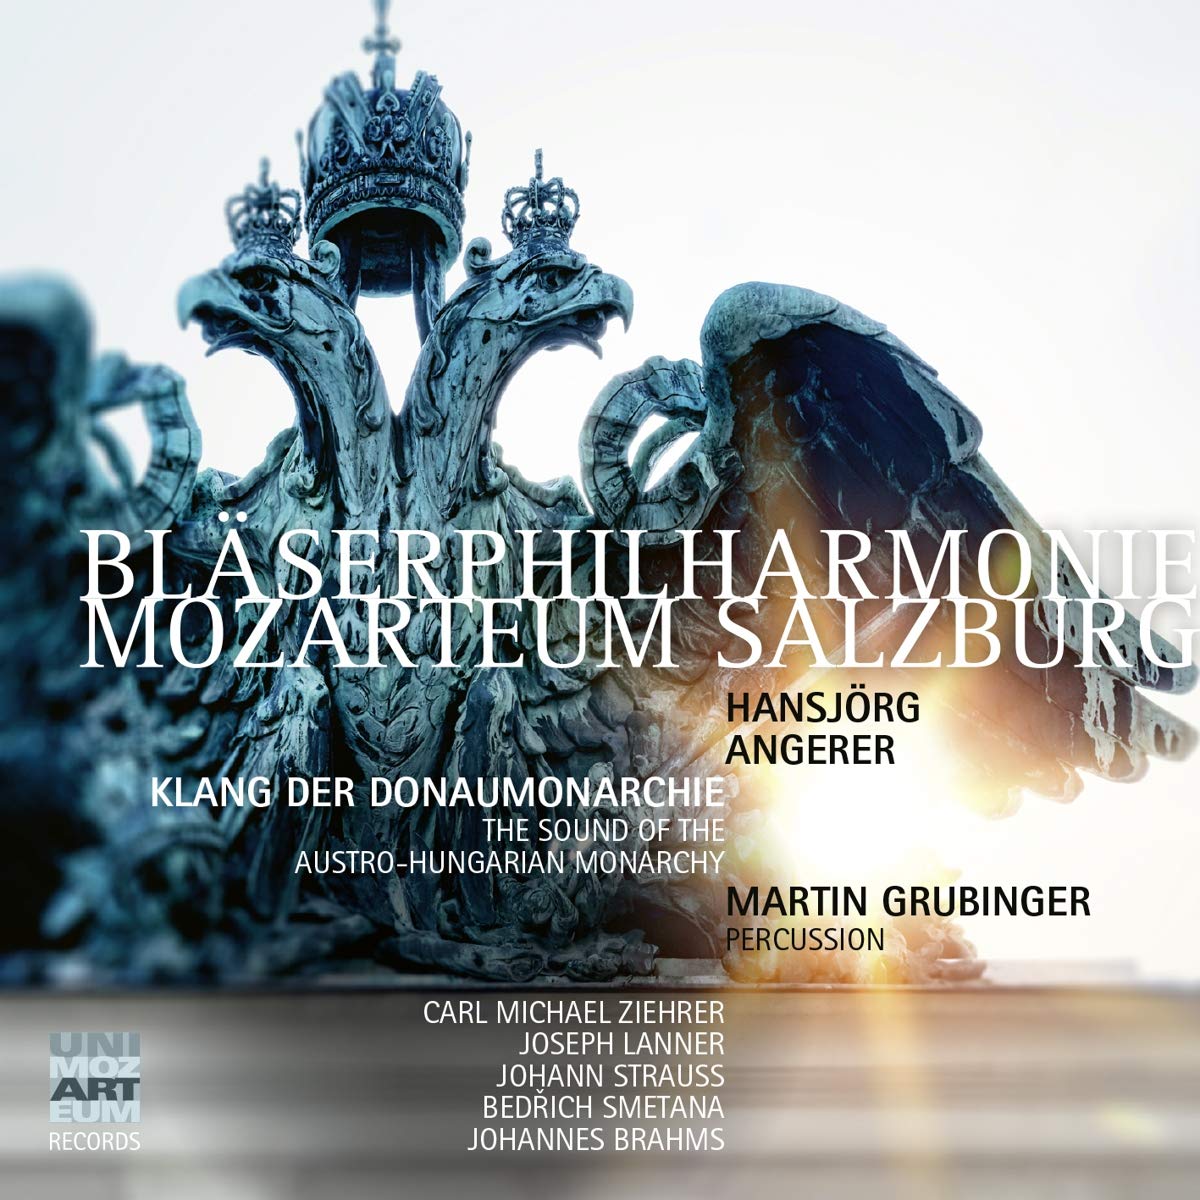 Audio Cd Blaserphilharmonie Mozarteum: Klang Der Donaumonarchie (2 Cd) NUOVO SIGILLATO, EDIZIONE DEL 10/02/2021 SUBITO DISPONIBILE